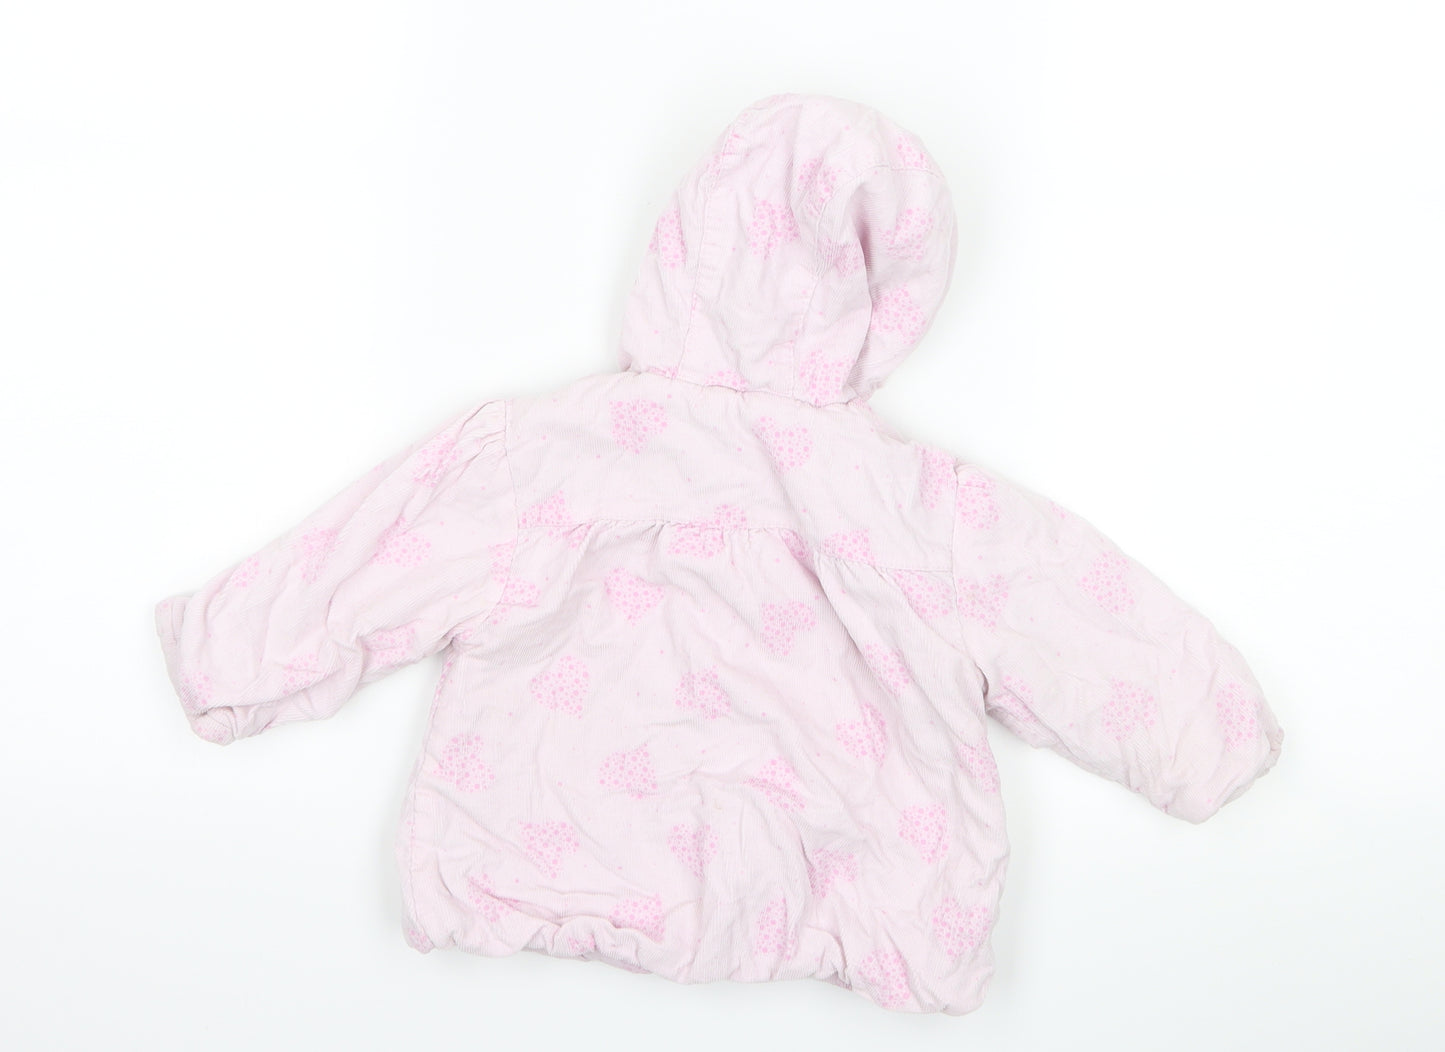 Pitter Patter Girls Pink   Jacket  Size 6-9 Months  - Love heart print